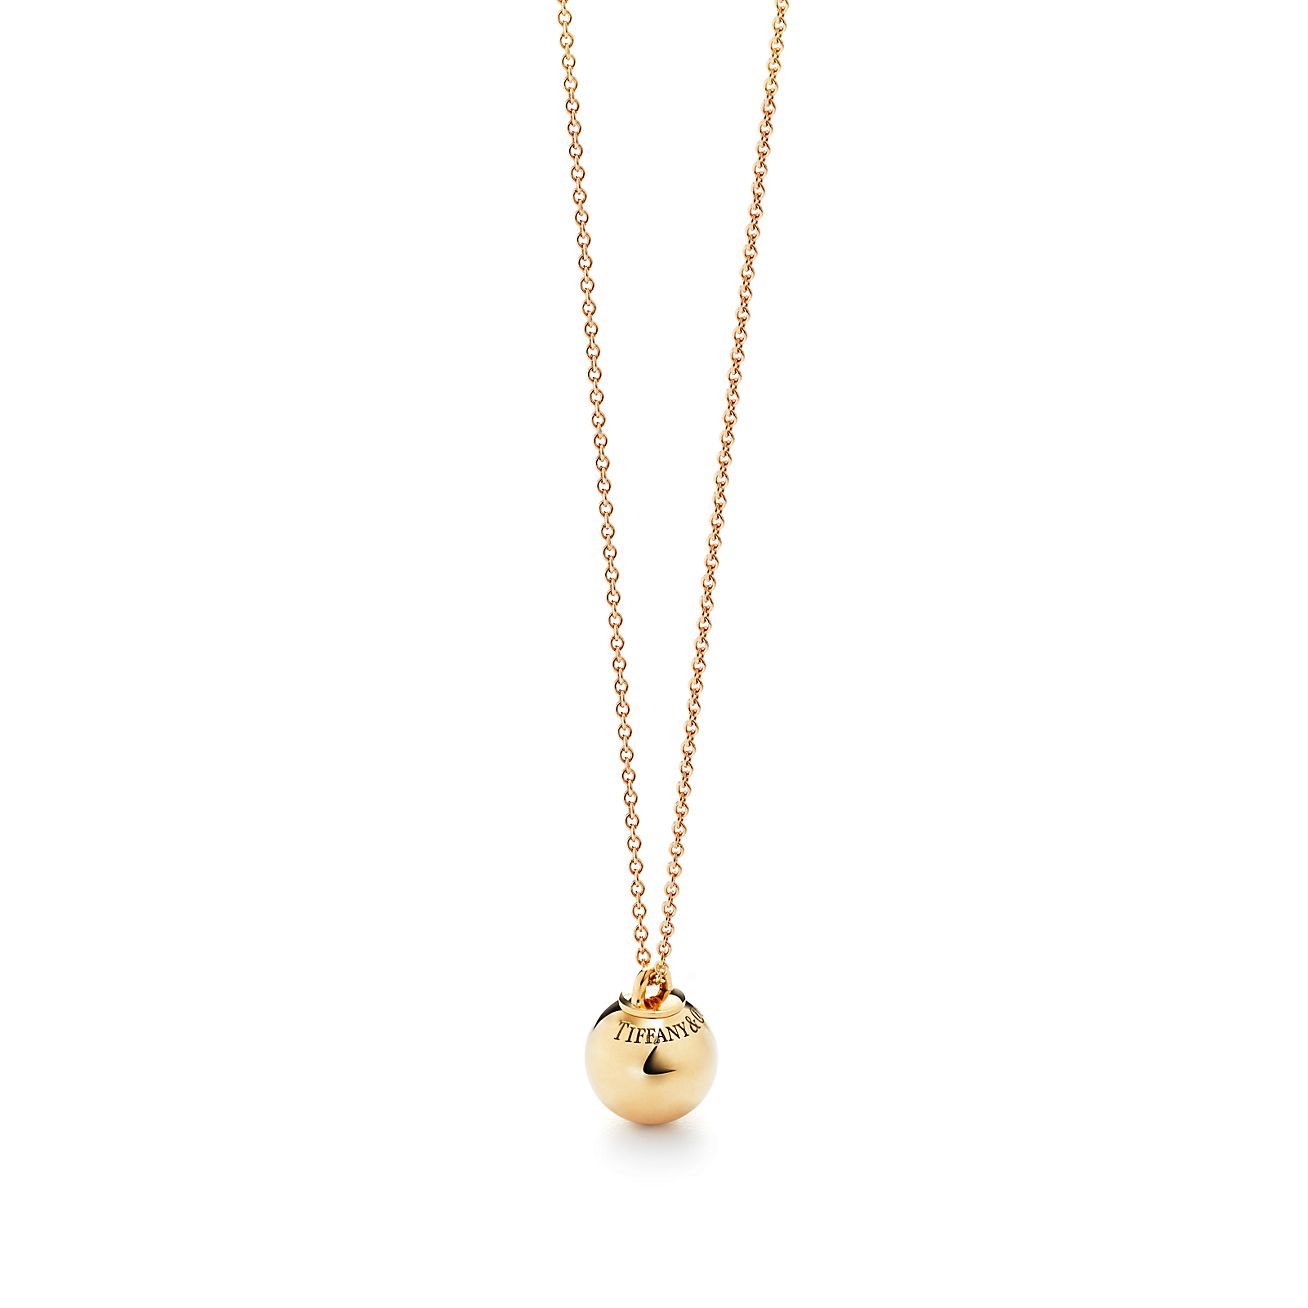 Shop Tiffany HardWear 18K Gold Ball Pendant | Tiffany & Co.